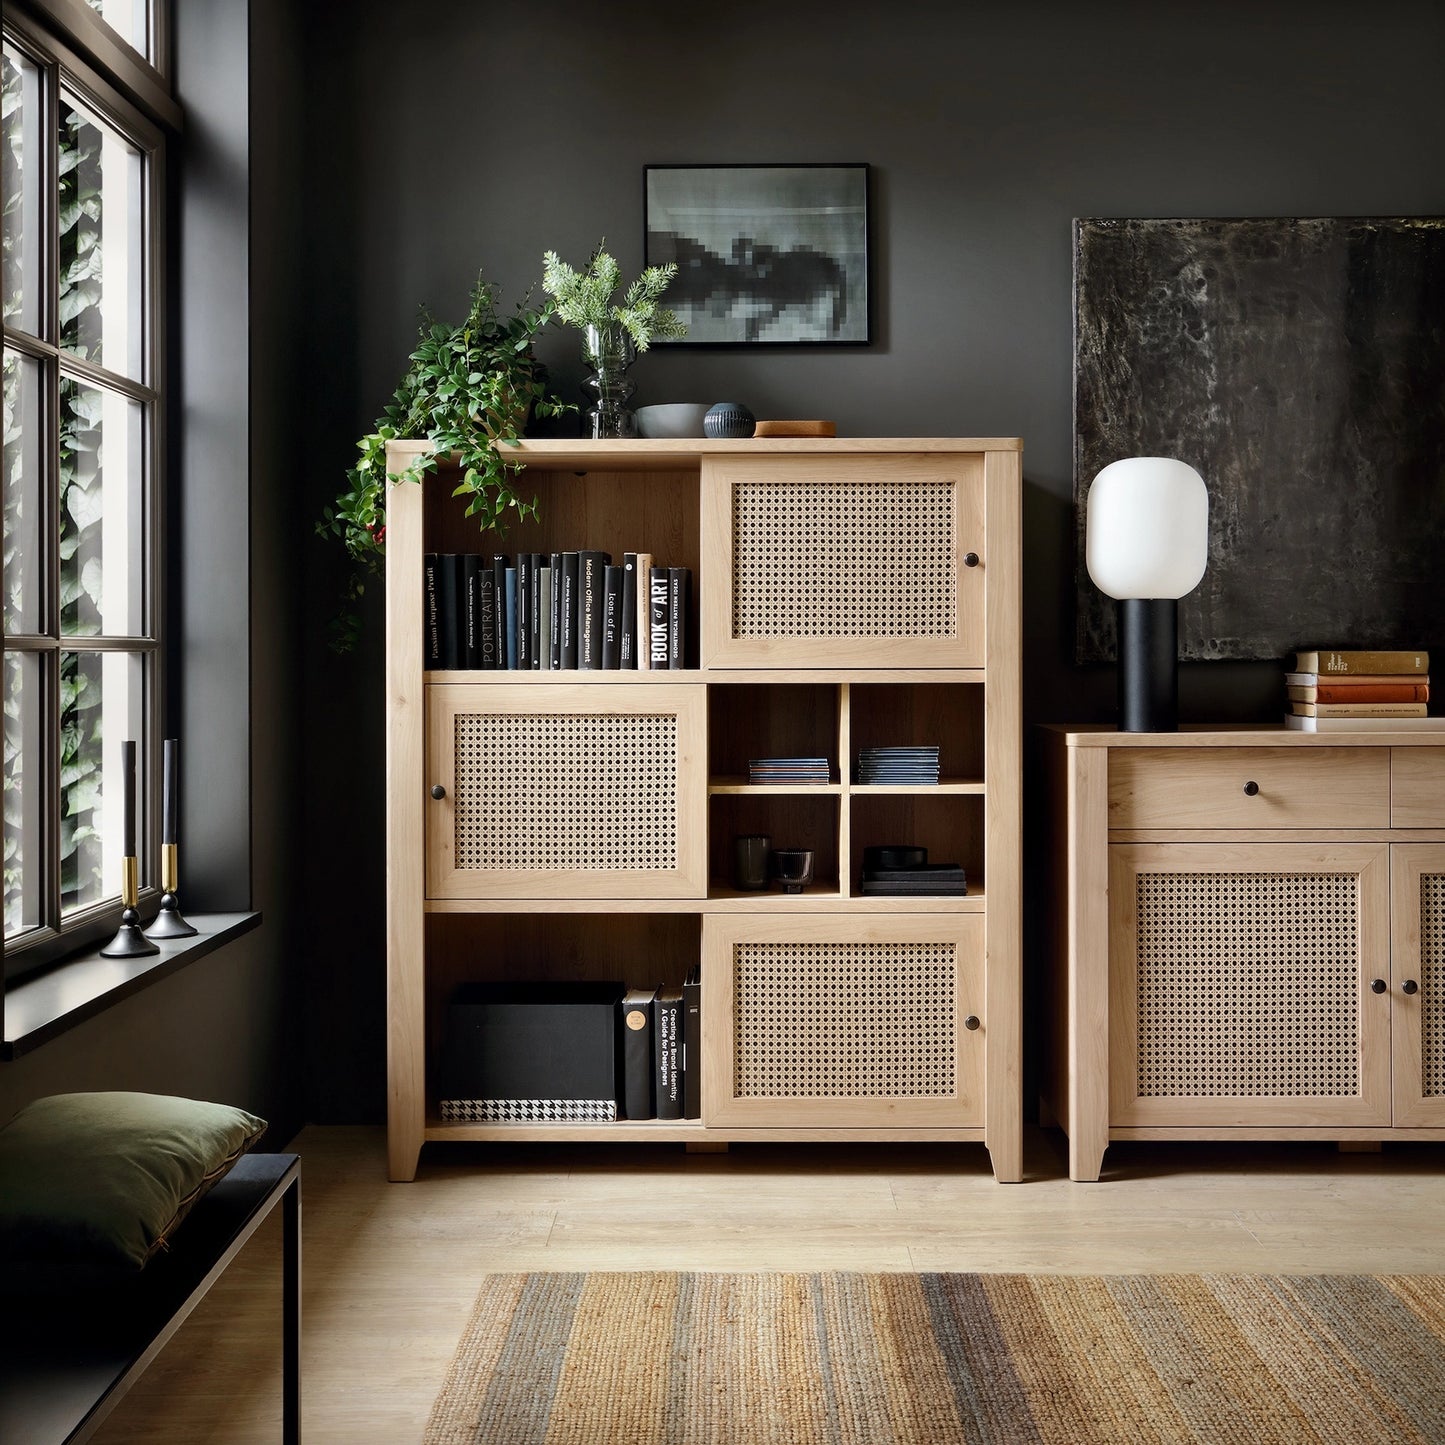 Furniture To Go Cestino 3 Door Cabinet in Jackson Hickory Oak & Rattan Effect